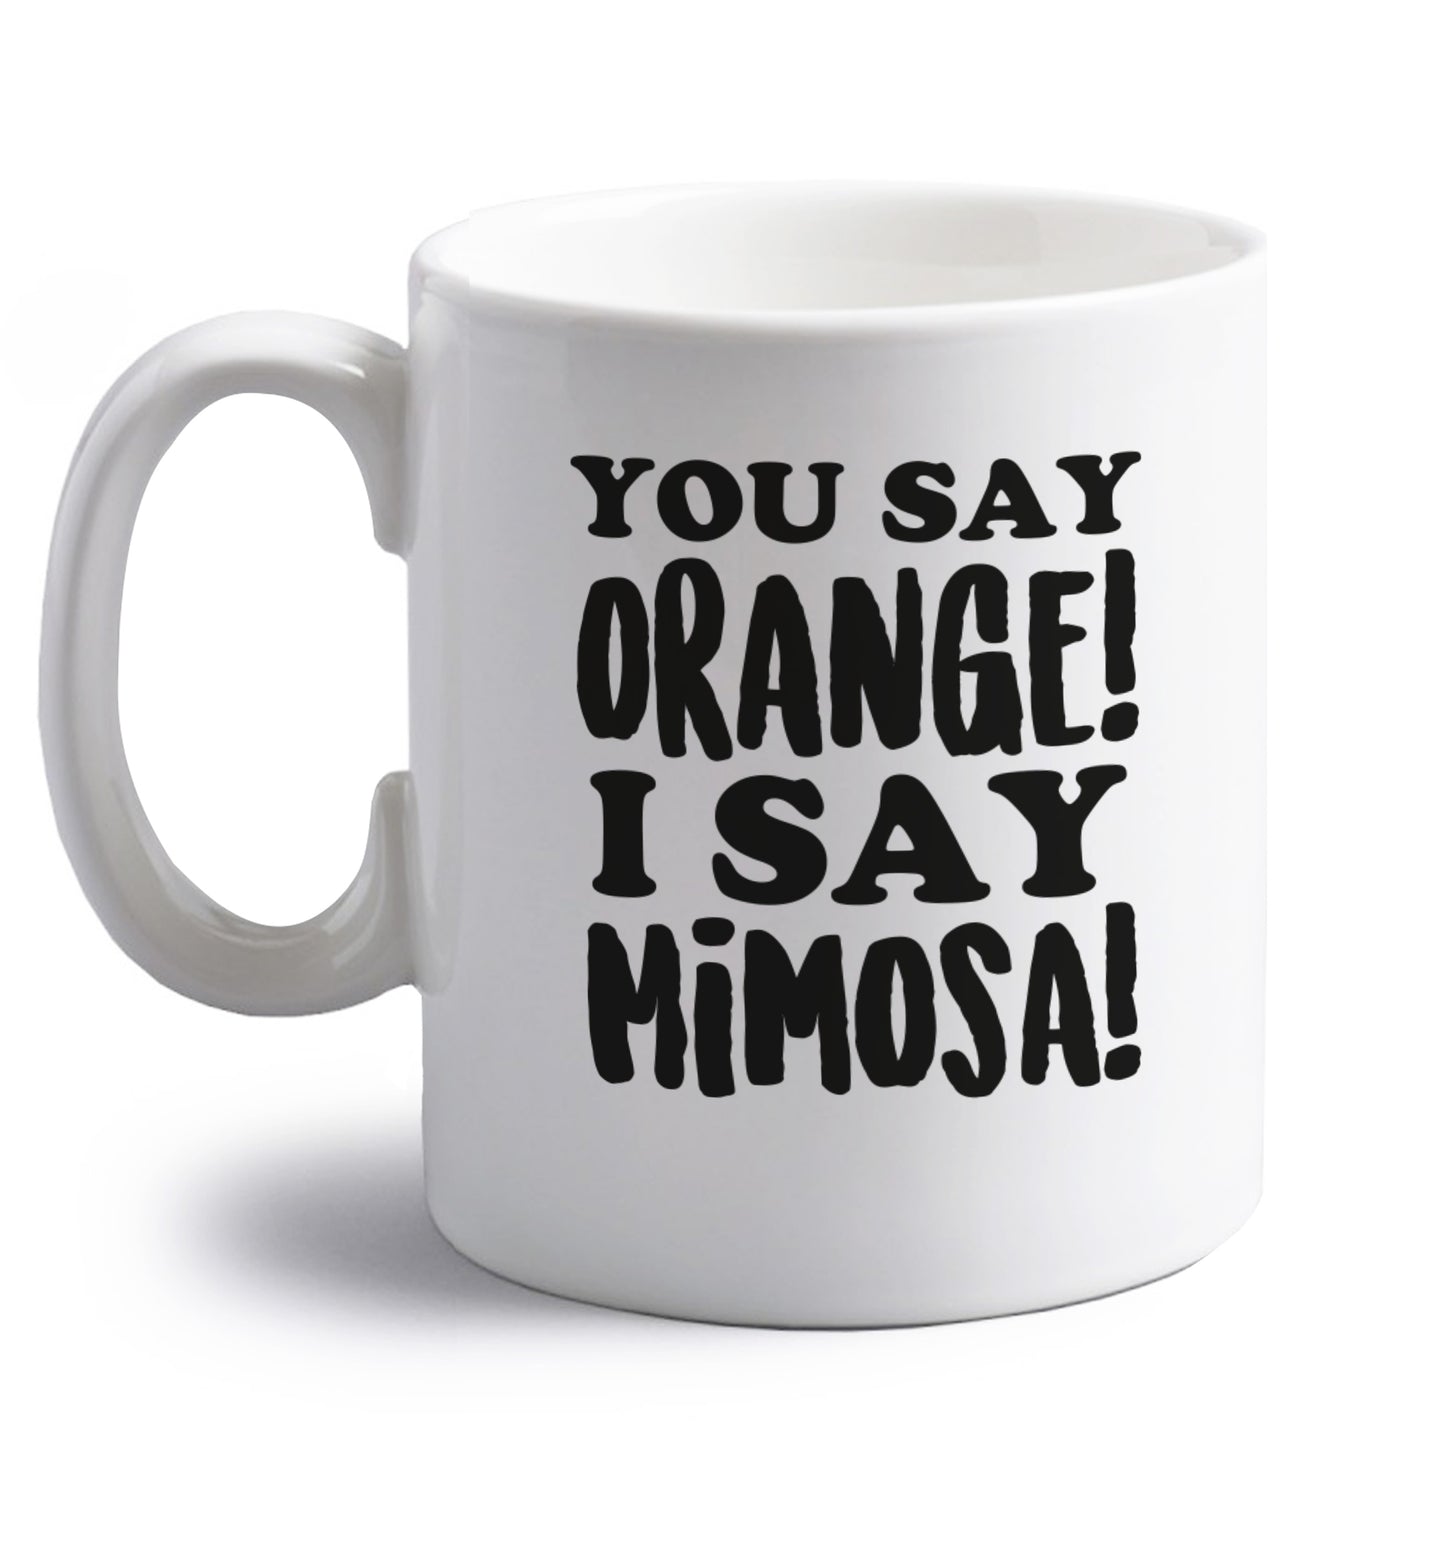 You say orange I say mimosa! right handed white ceramic mug 